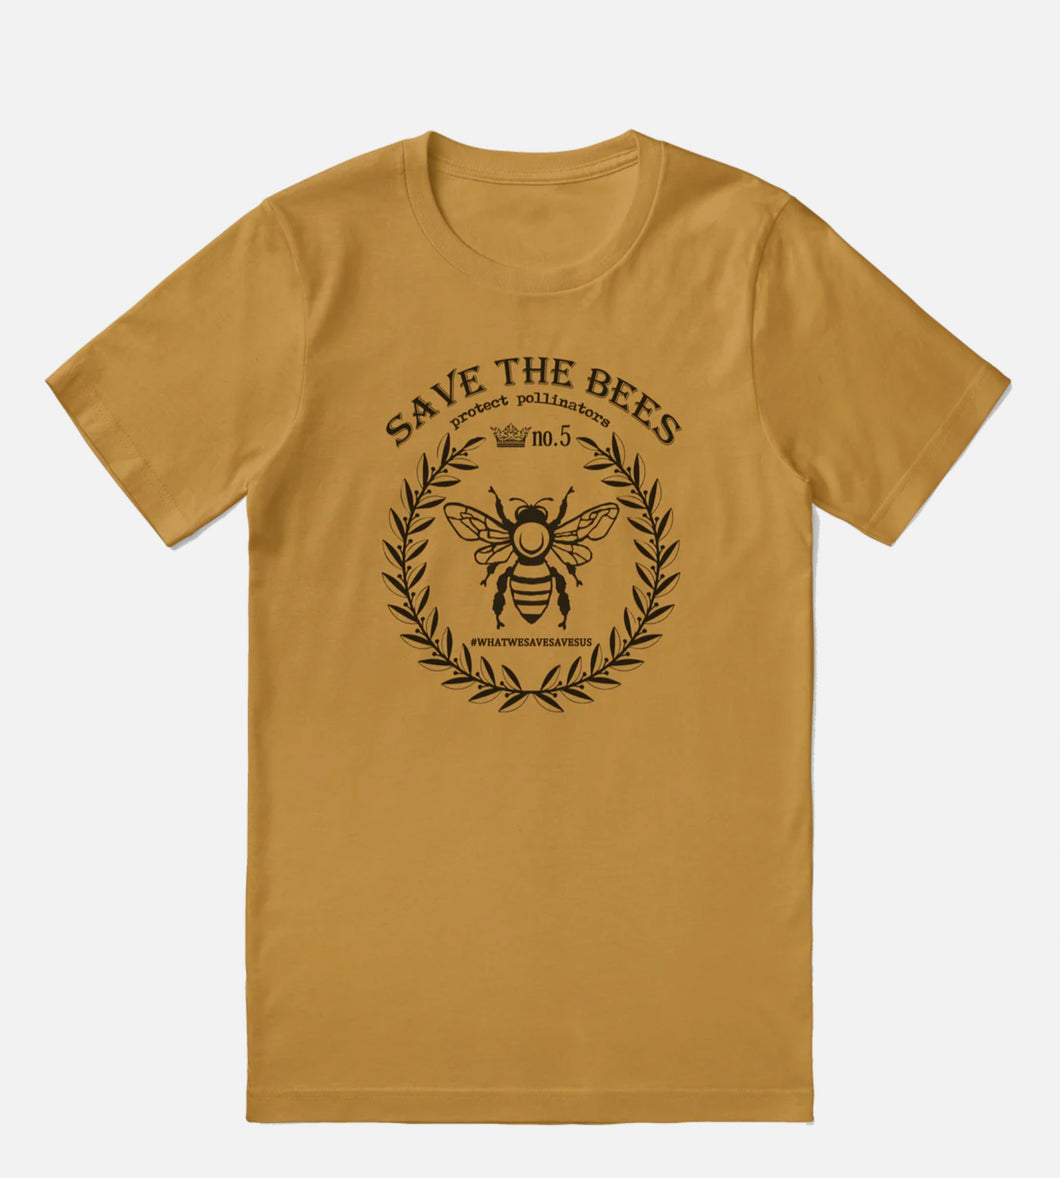 Save the Bees tee shirt